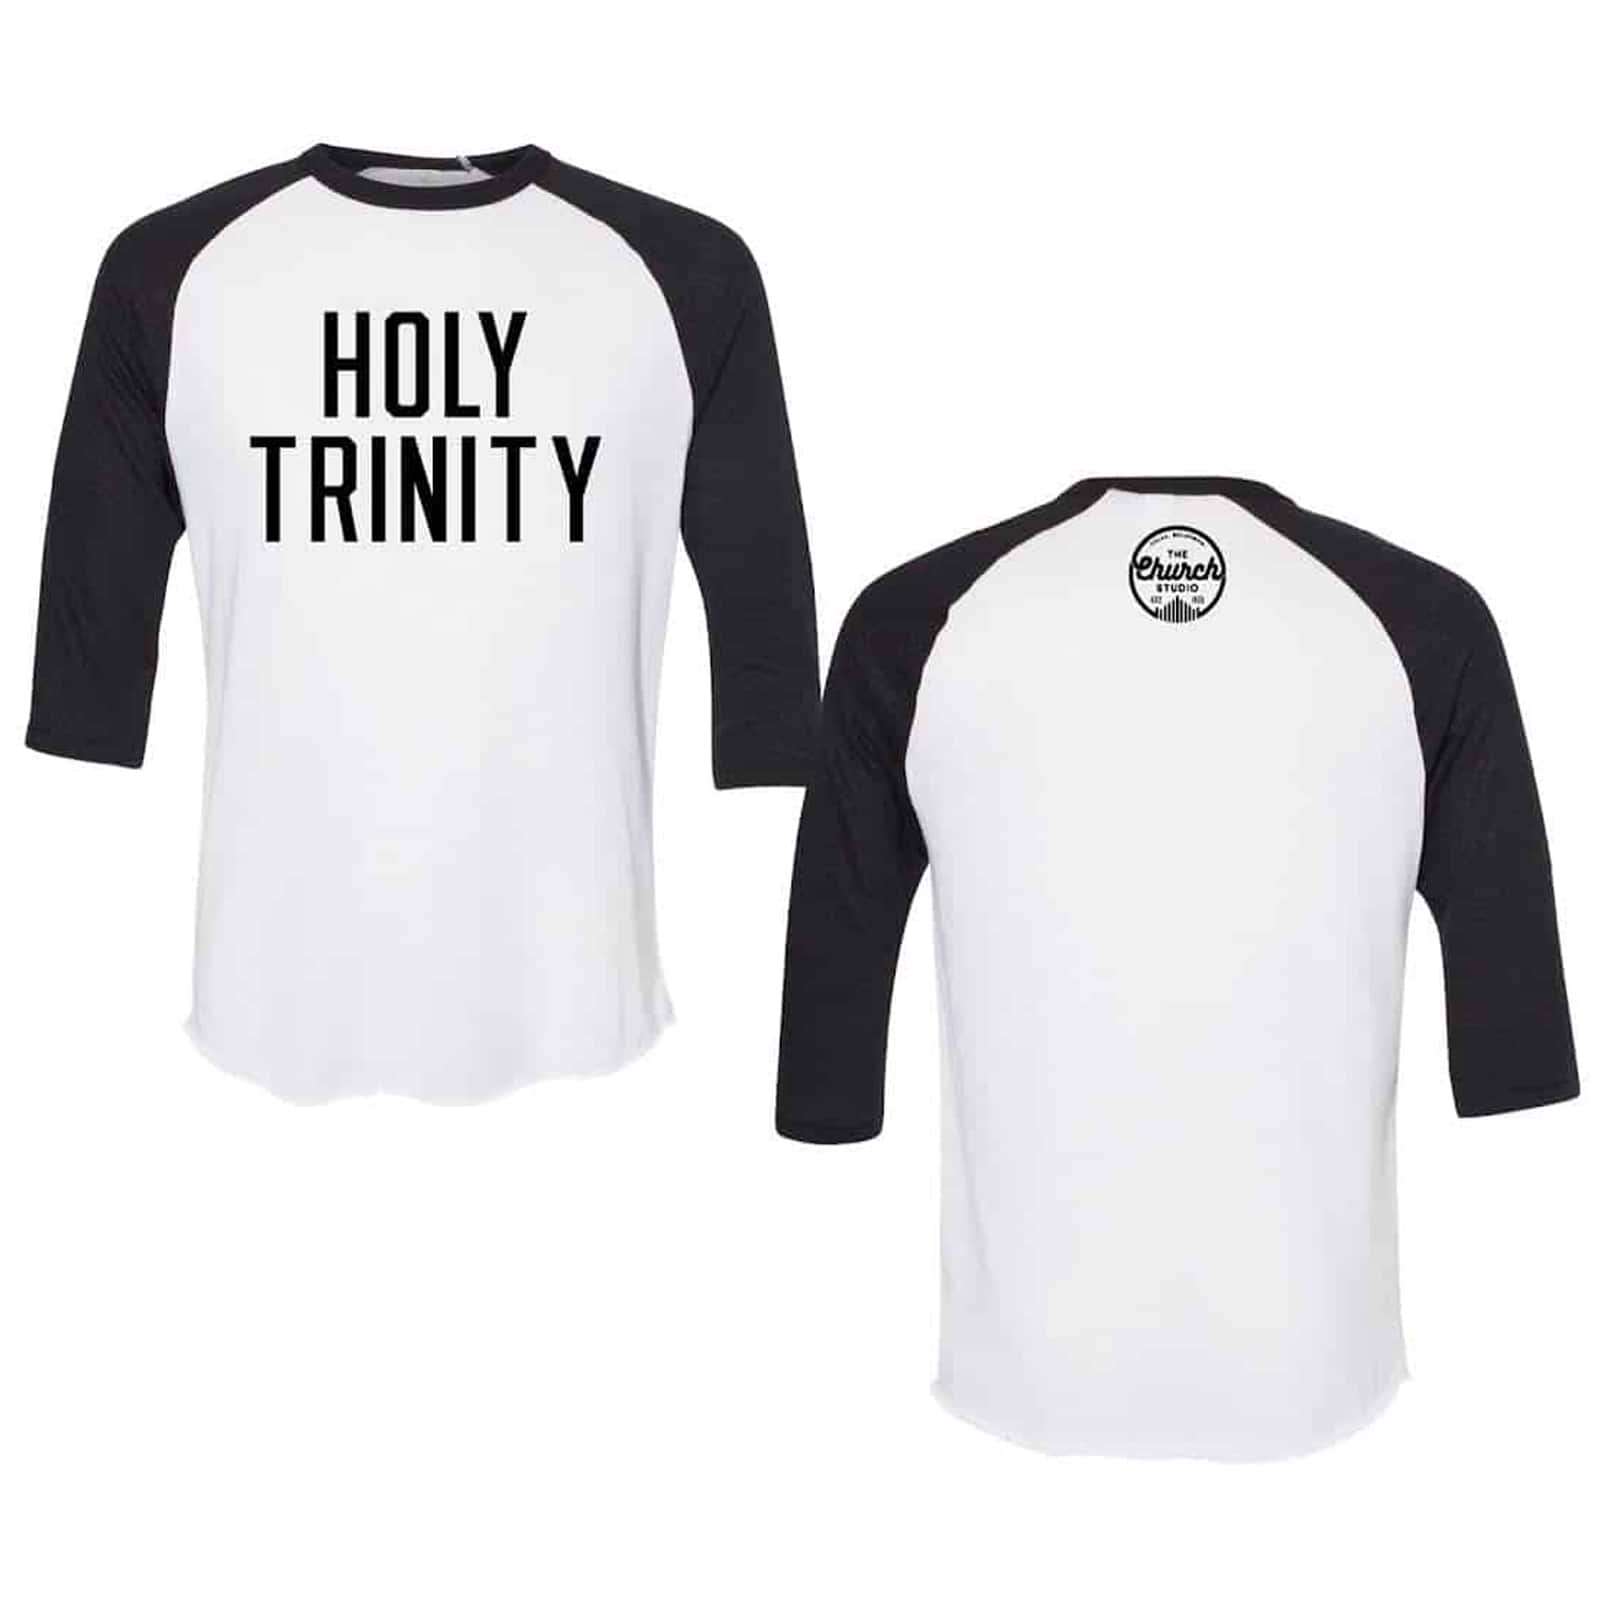 The Church Studio Holy Trinity Raglan Baseball T-Shirt